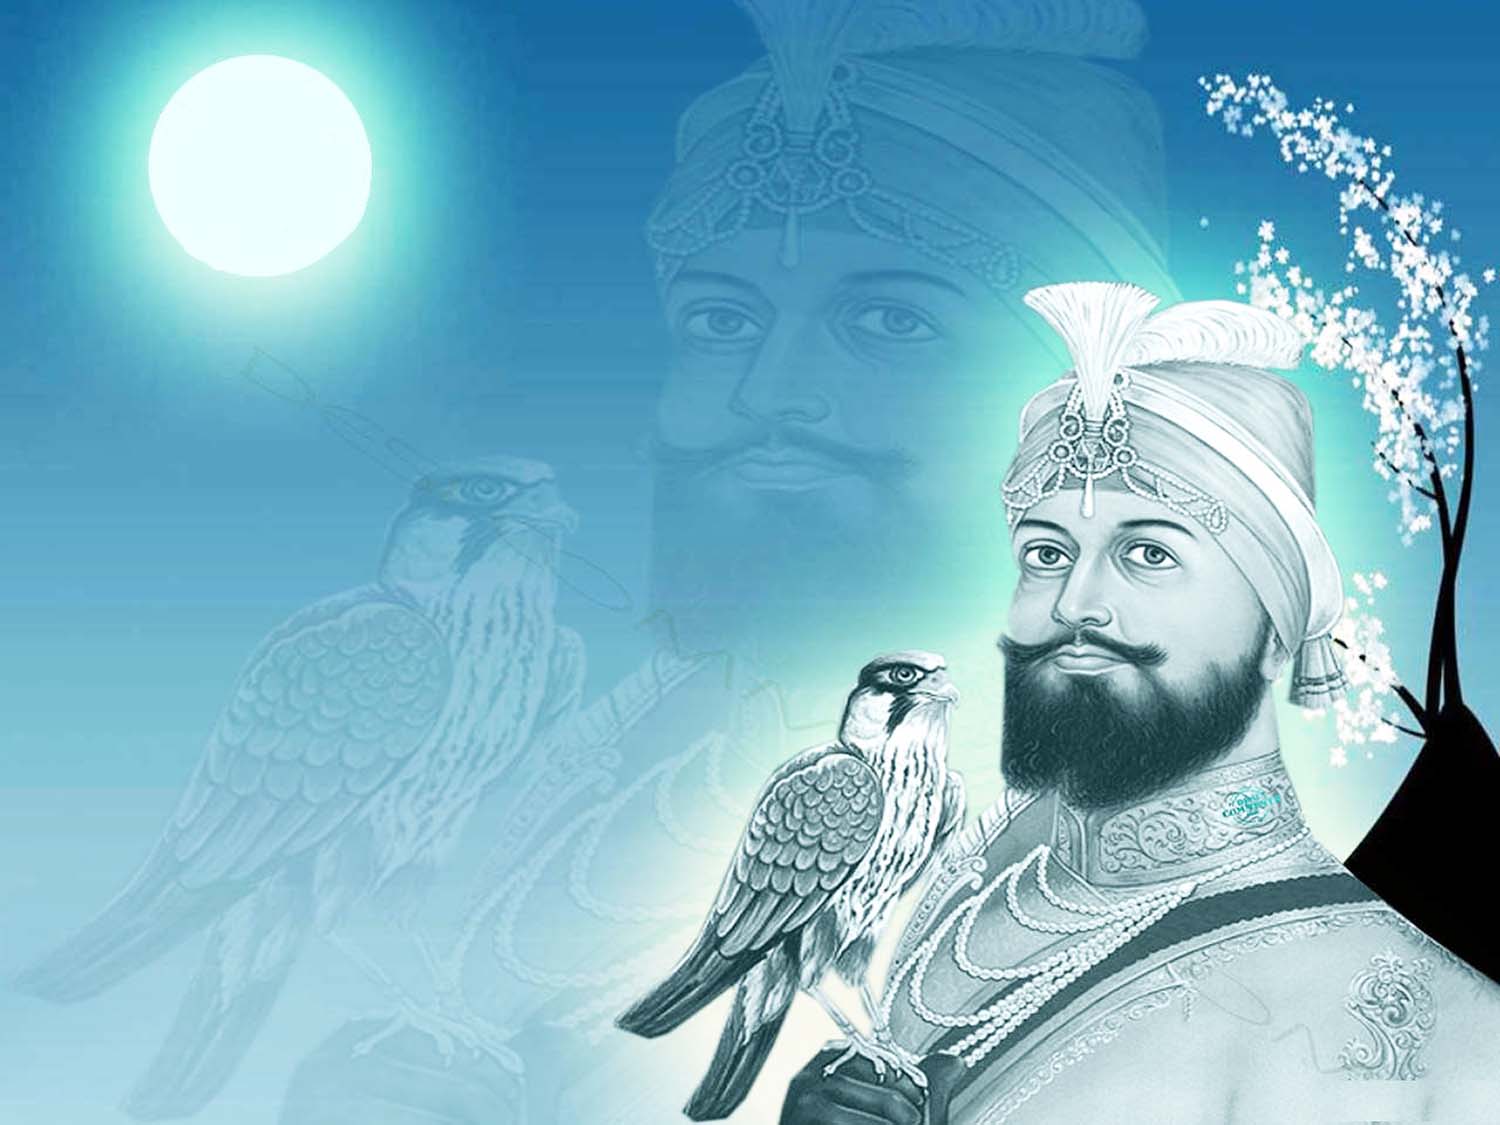 Guru Gobind Singh Ji Image and Wallpapers HD Free Download.